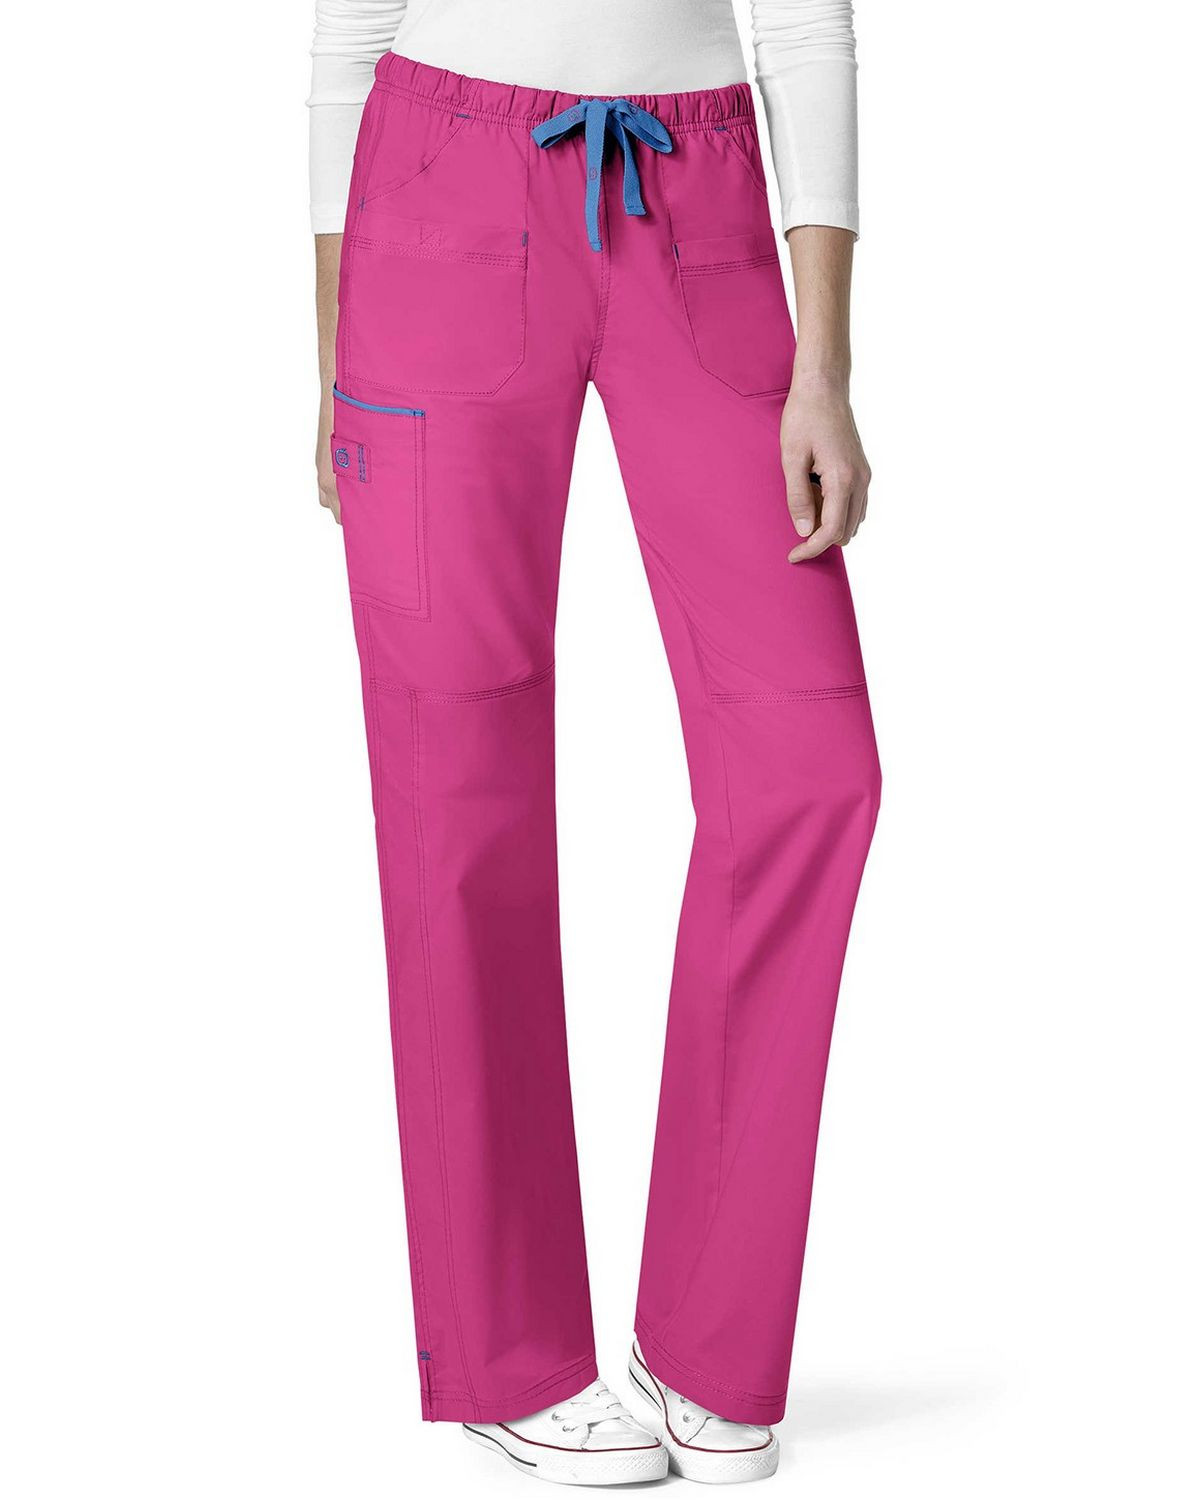 Wonderwink 5508P Women's Petite Joy-Denim Style Straight Pant - Hot Pink - MDP #denim